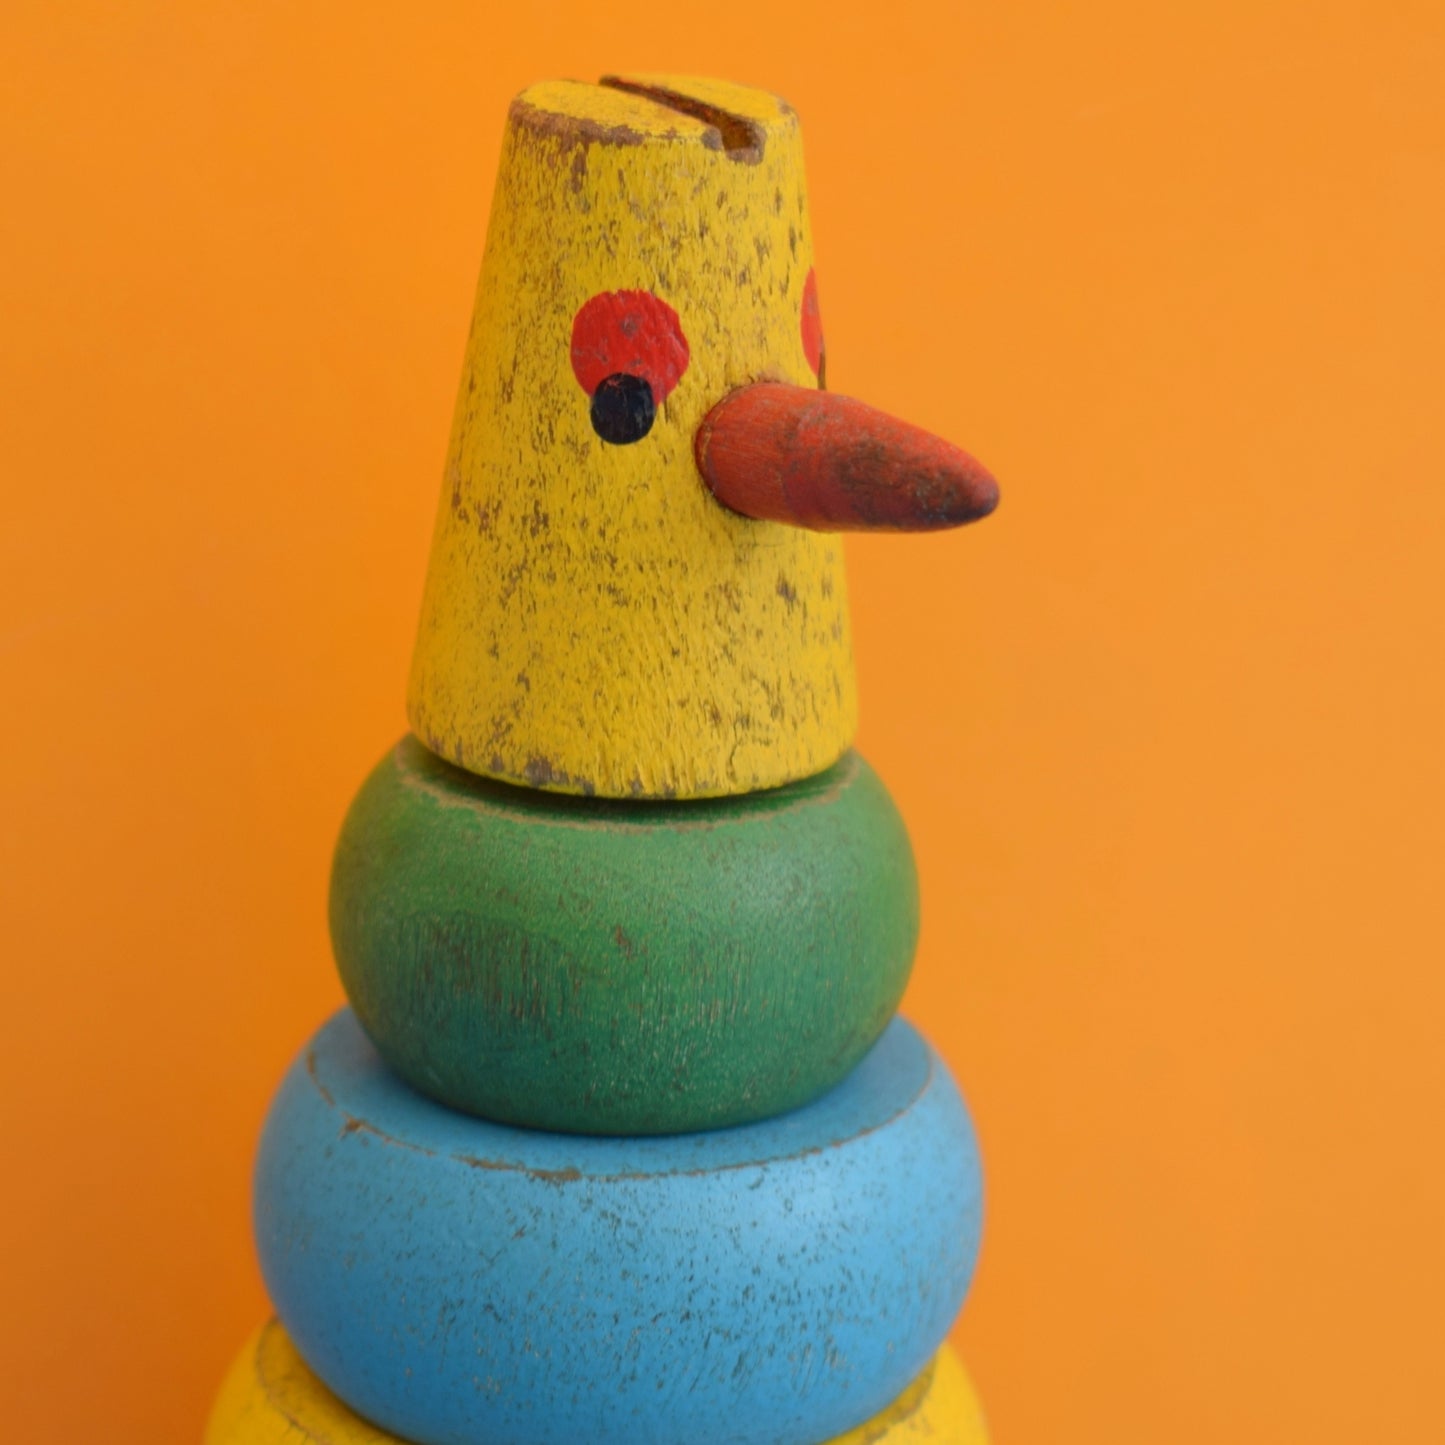 Vintage 1960s Wooden Stacking Toy - Bird